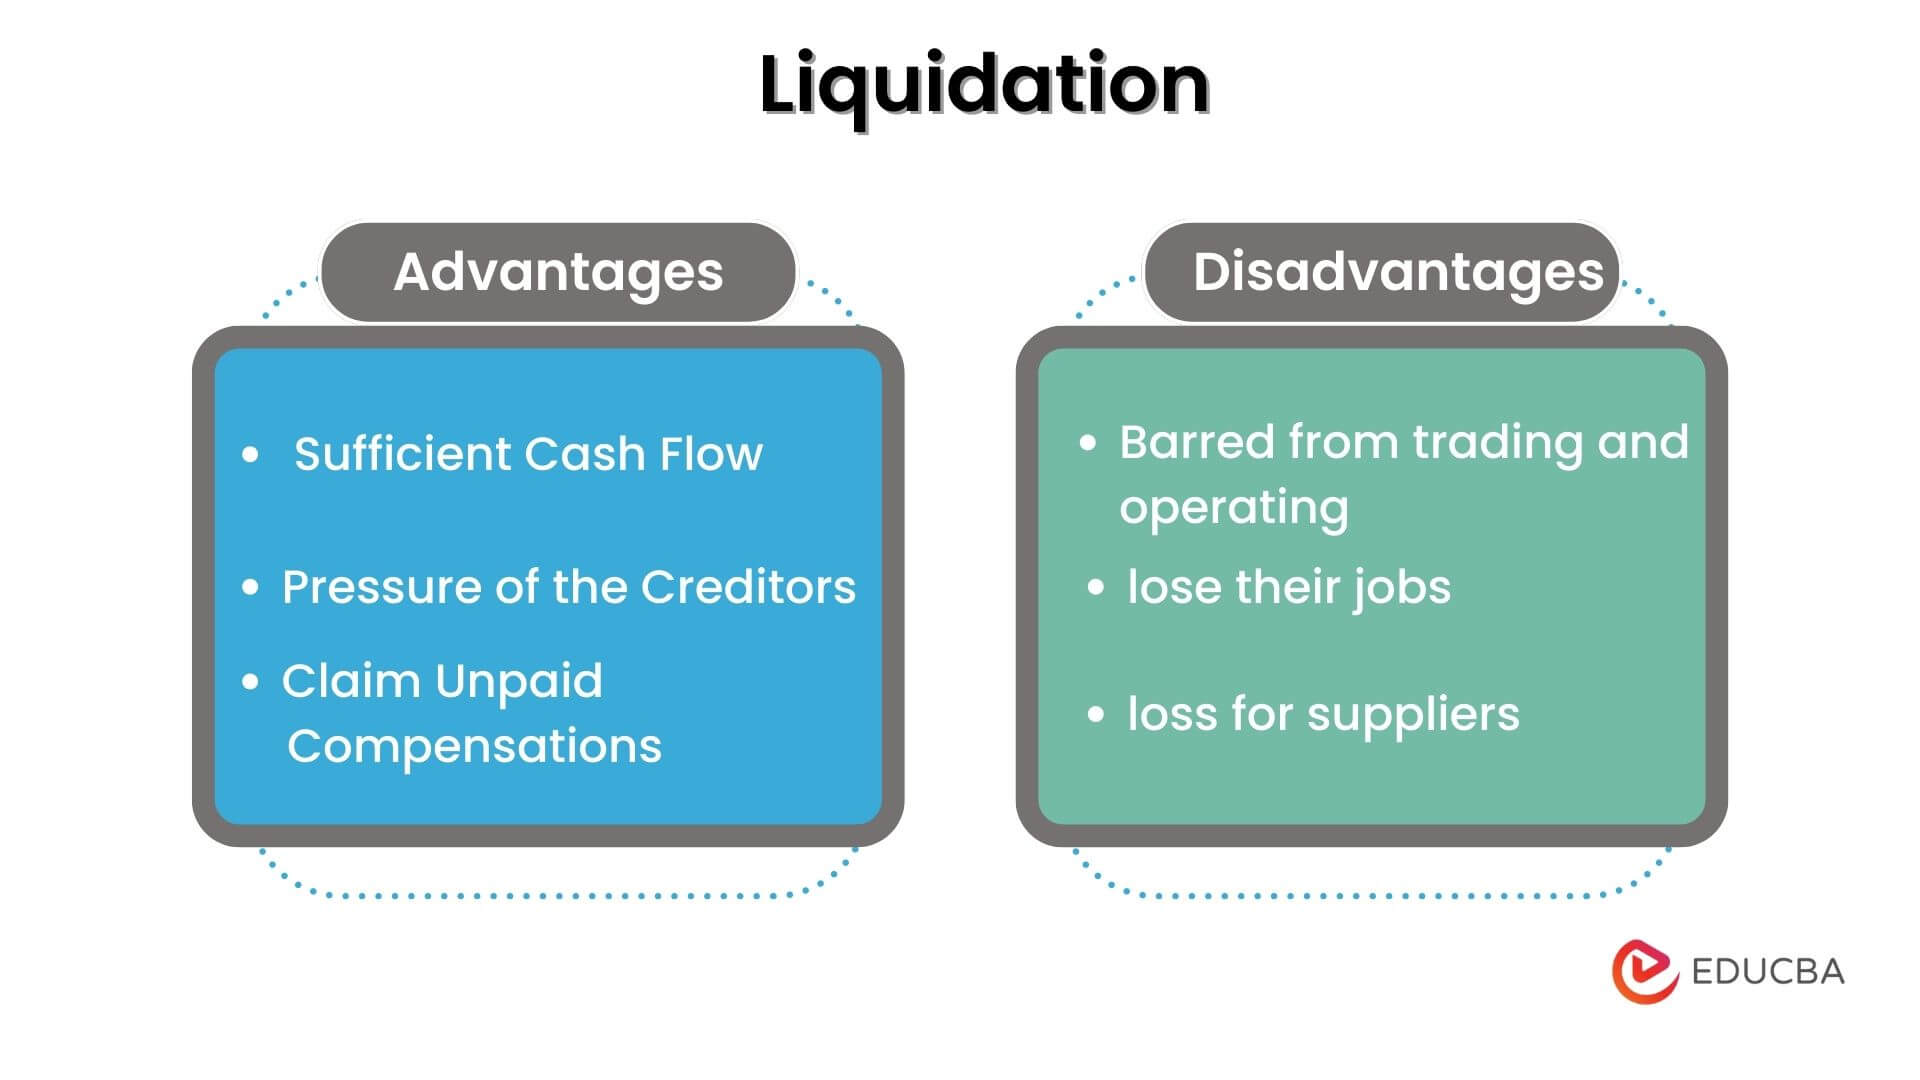 Advantages and Disadvantages of Liquidation